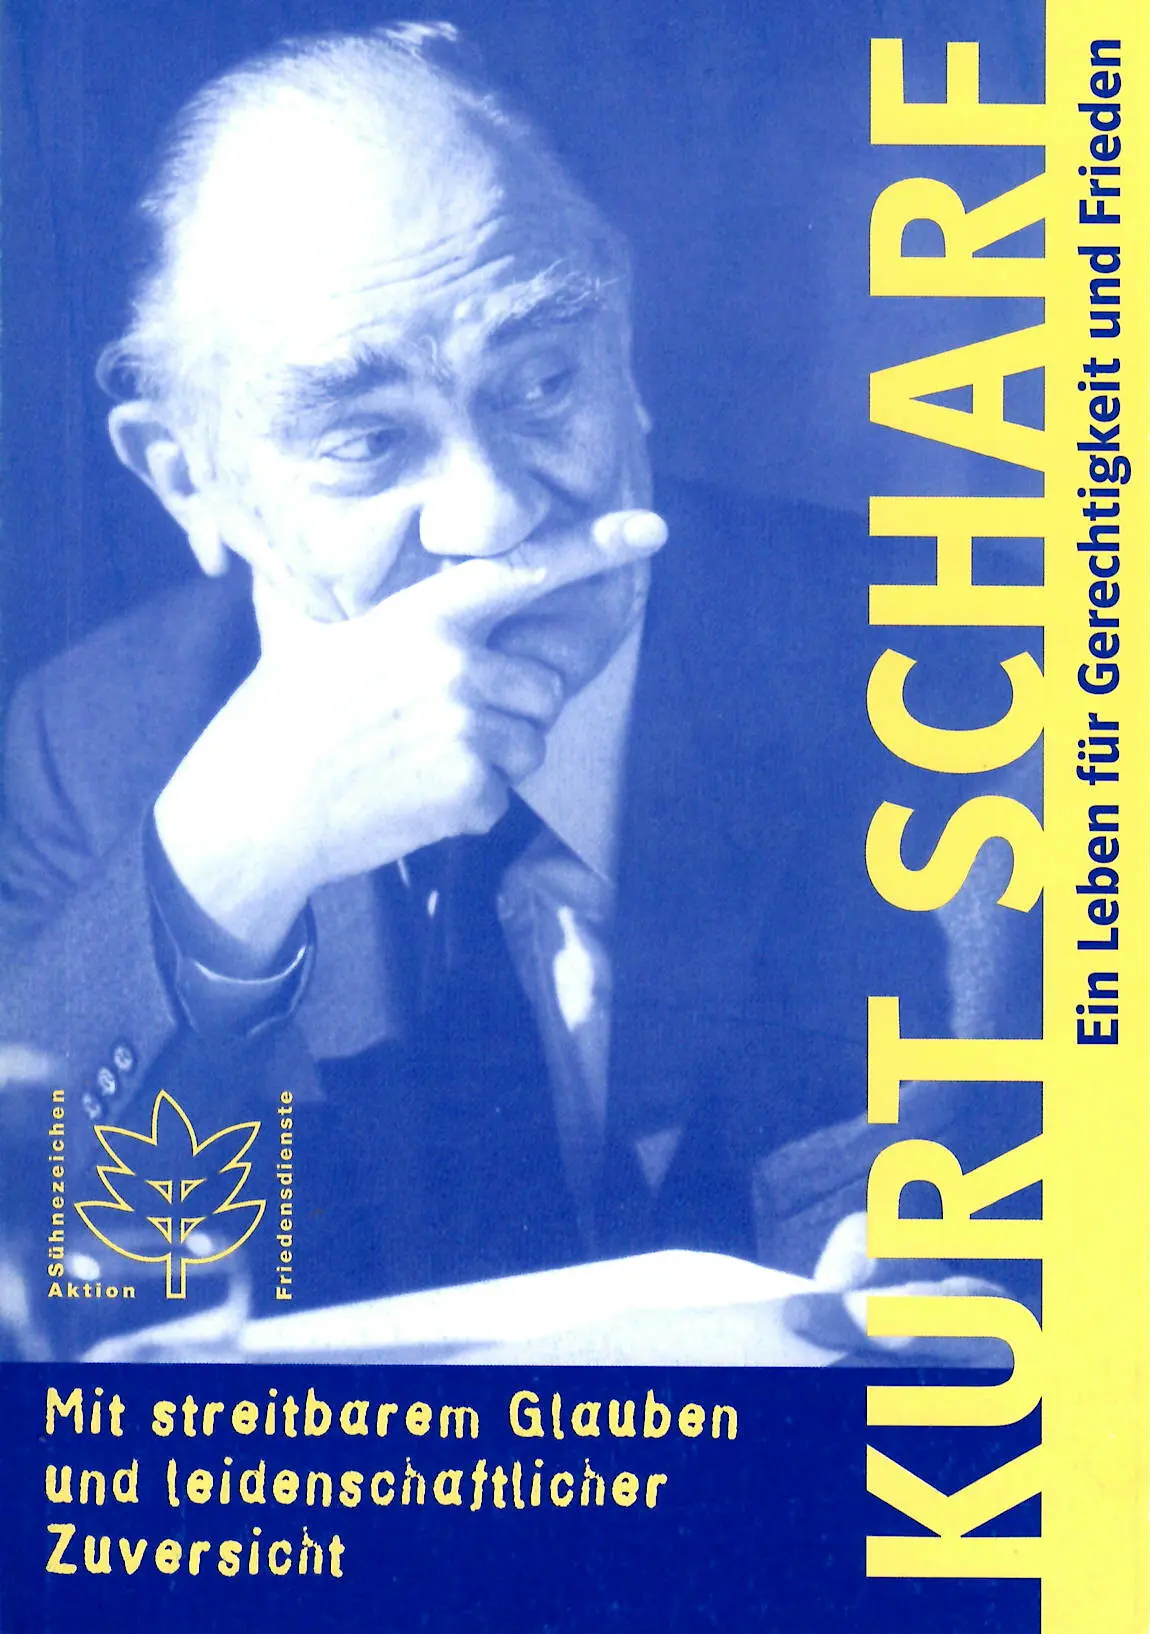 Titelbild der ASF e.V. Broschüre zum Gedenken an Bischof Kurt Scharf. o.J.